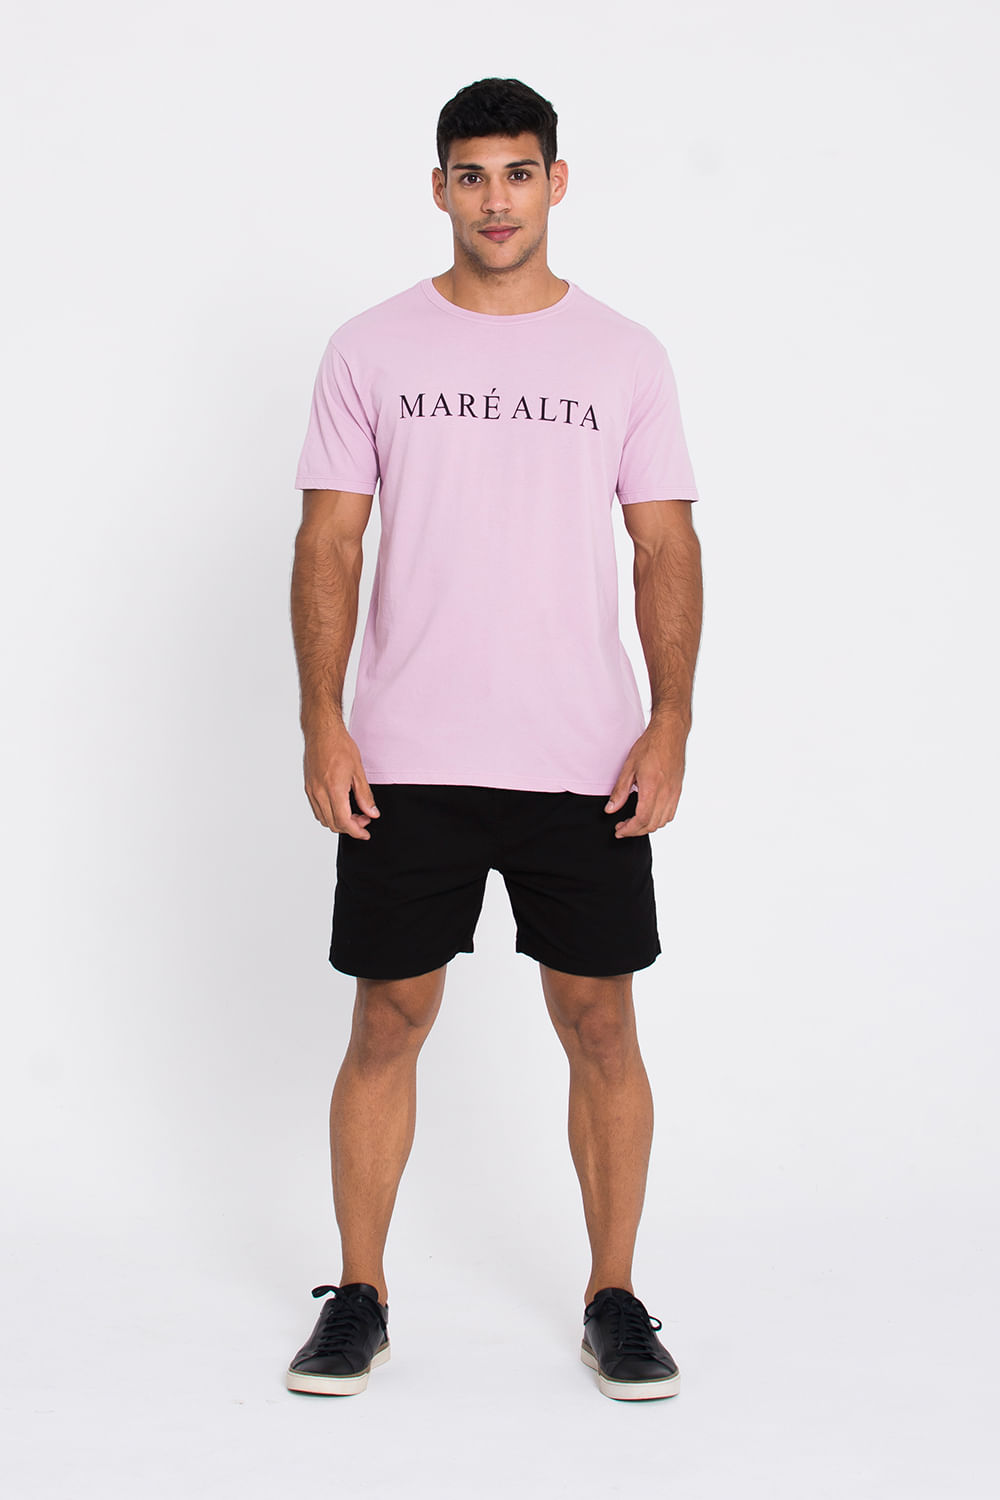 Camiseta-Mare-Alta-Rosa-Modelo